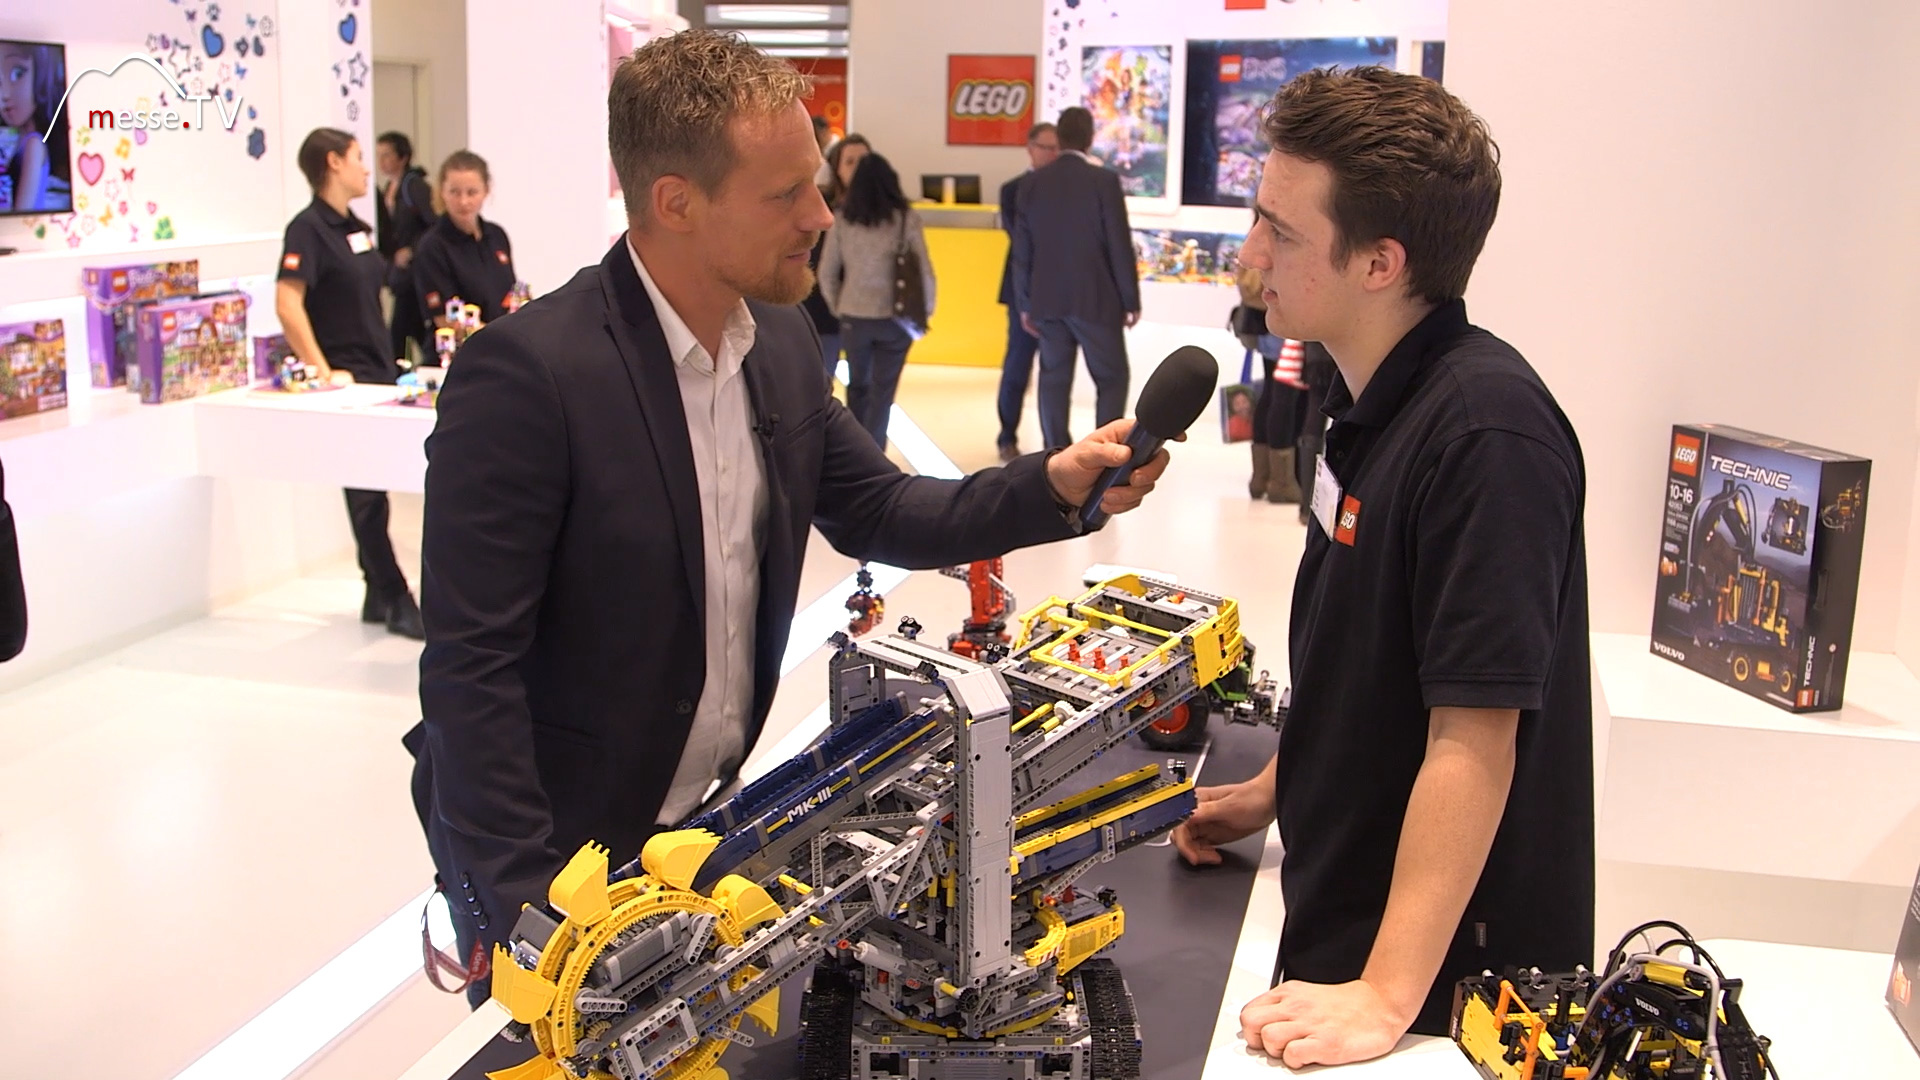 MesseTV Klas Boemecke in interview with Lego